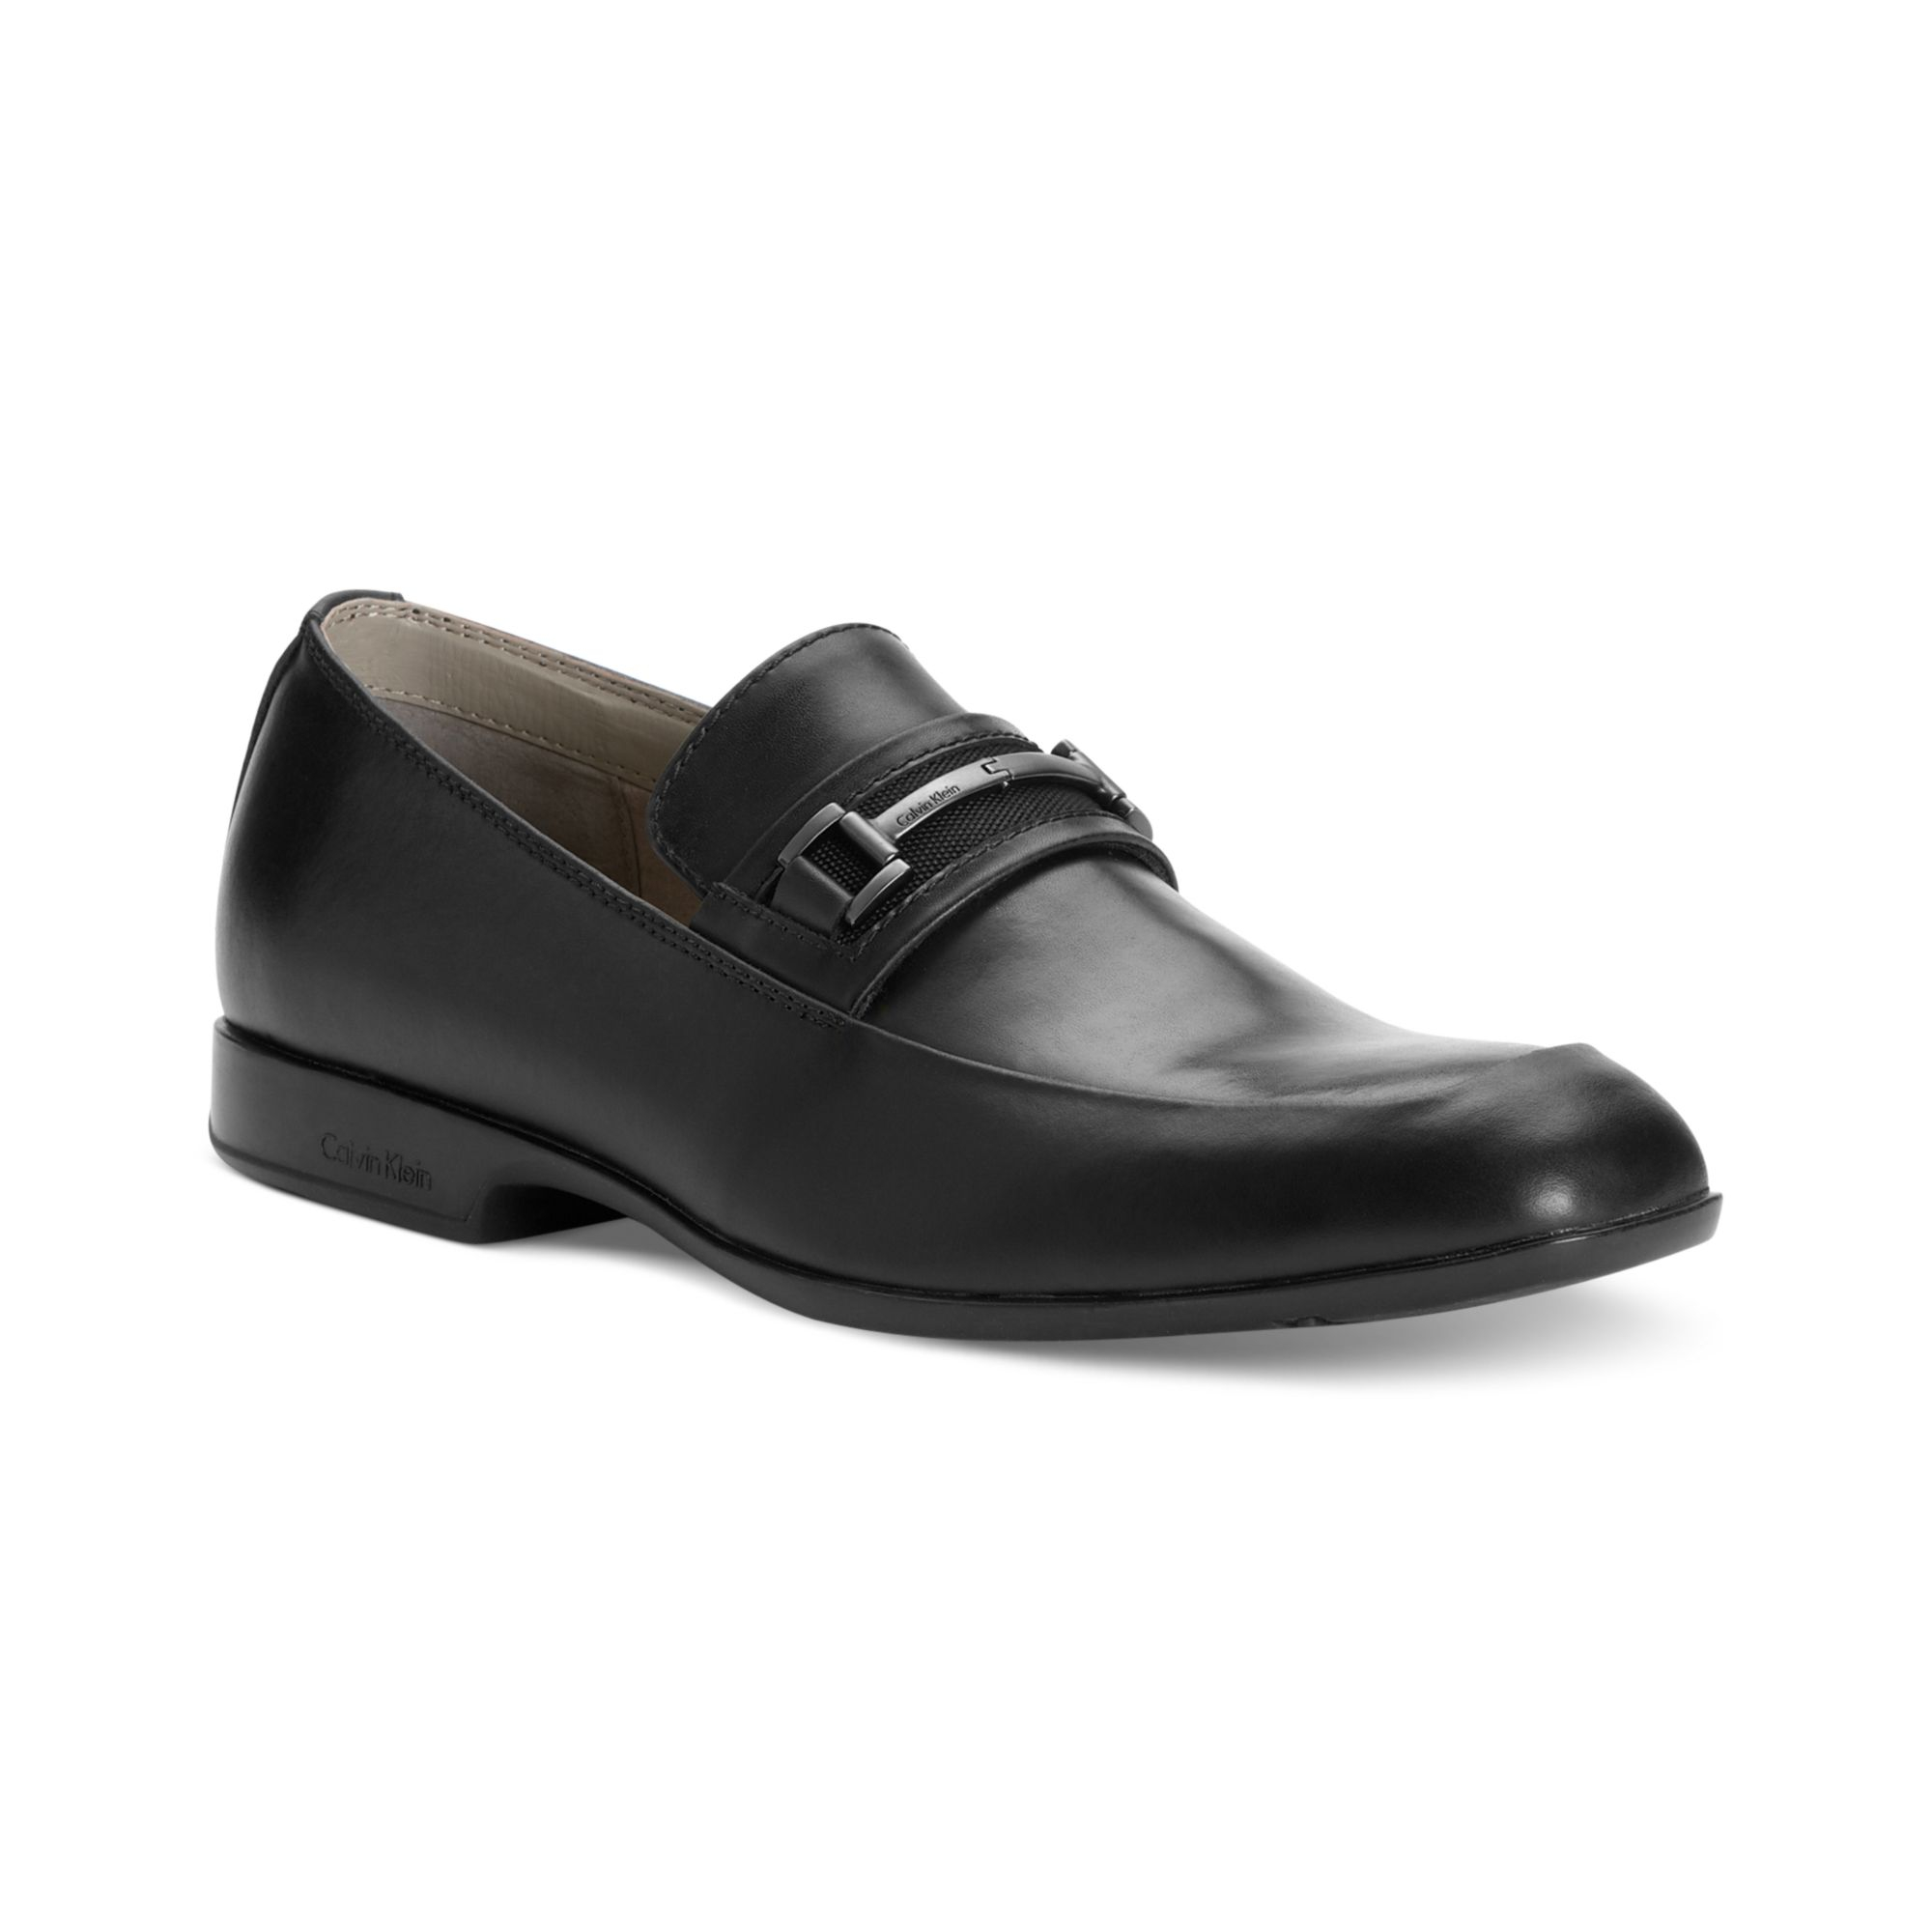 Lyst - Calvin Klein Adrien Bit Slip-on Shoes in Black for Men